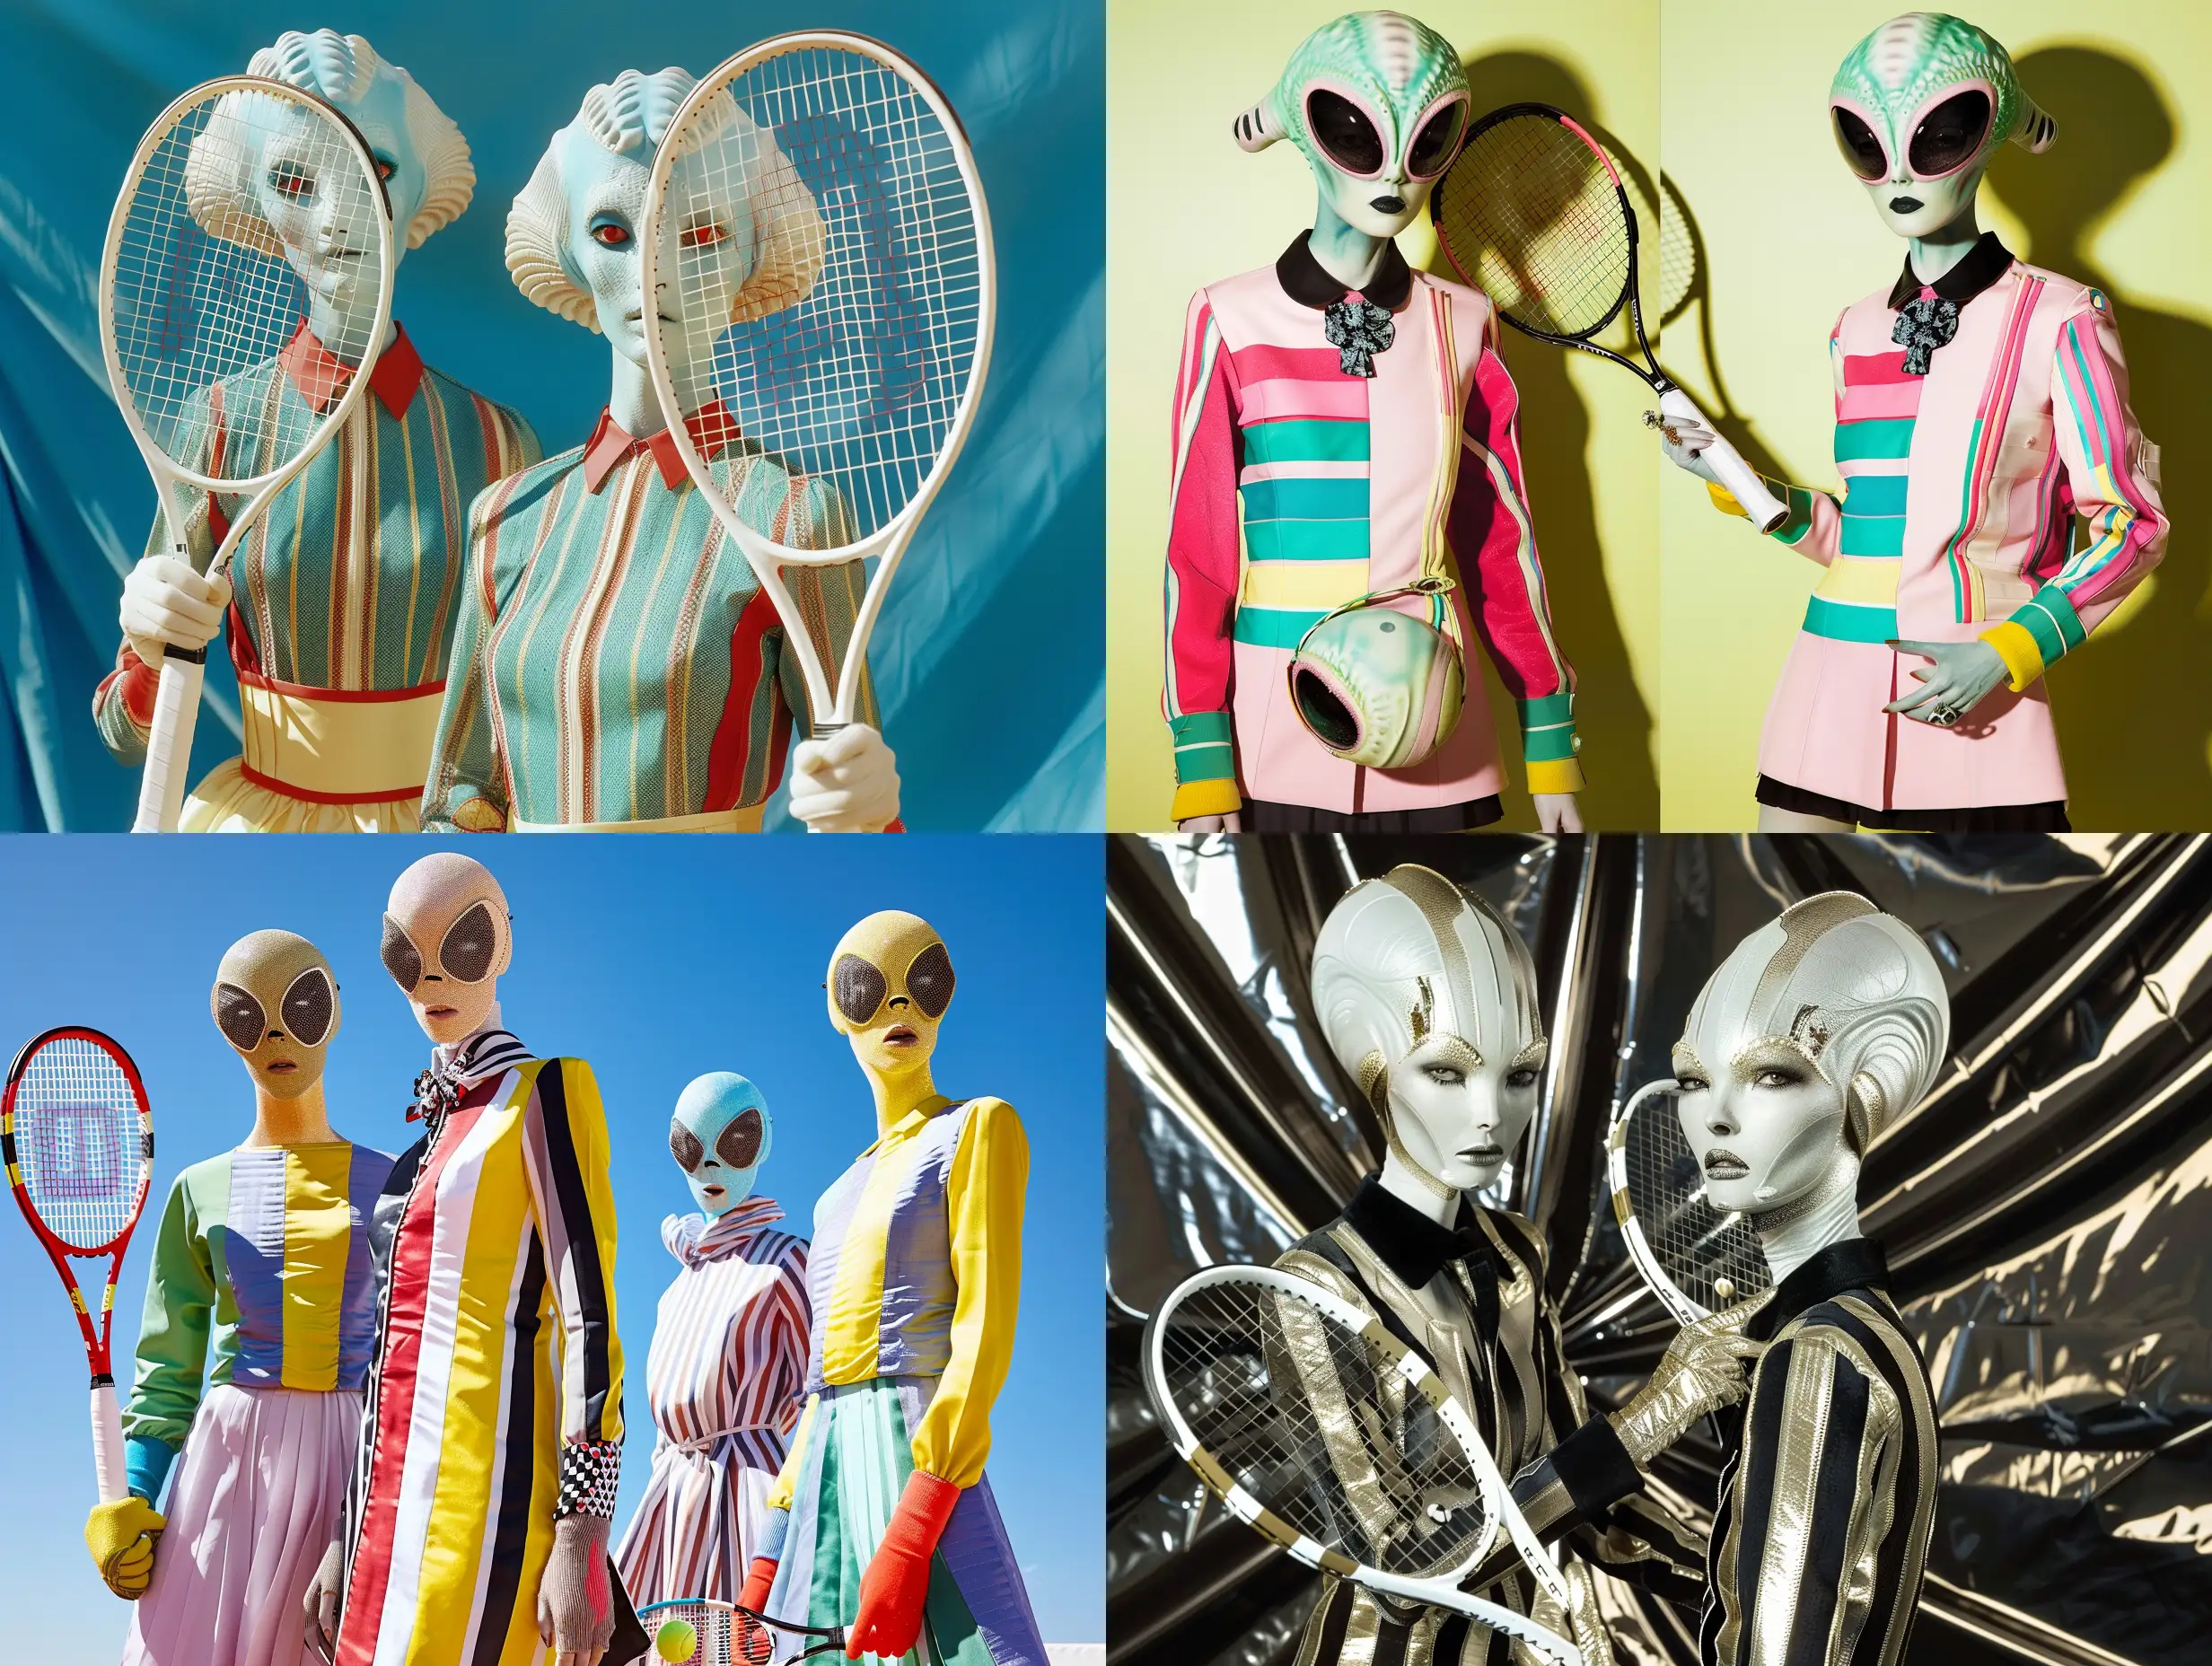 Futuristic-Tennis-Fashion-Alien-Models-in-Schiaparelli-Design-Photoshoot